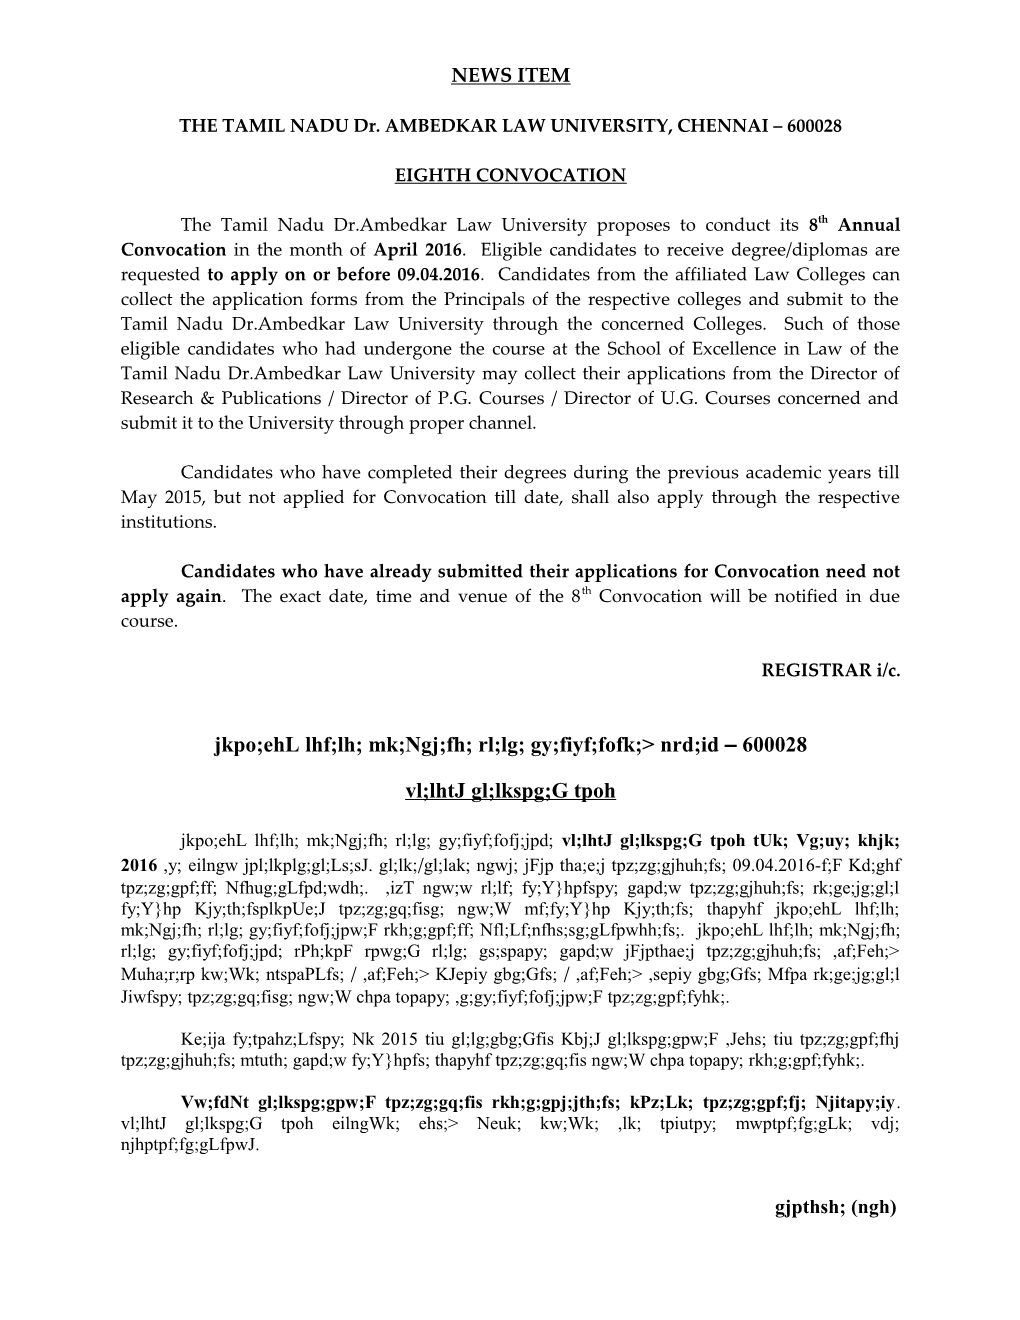 THE TAMIL NADU Dr. AMBEDKAR LAW UNIVERSITY, CHENNAI 600028